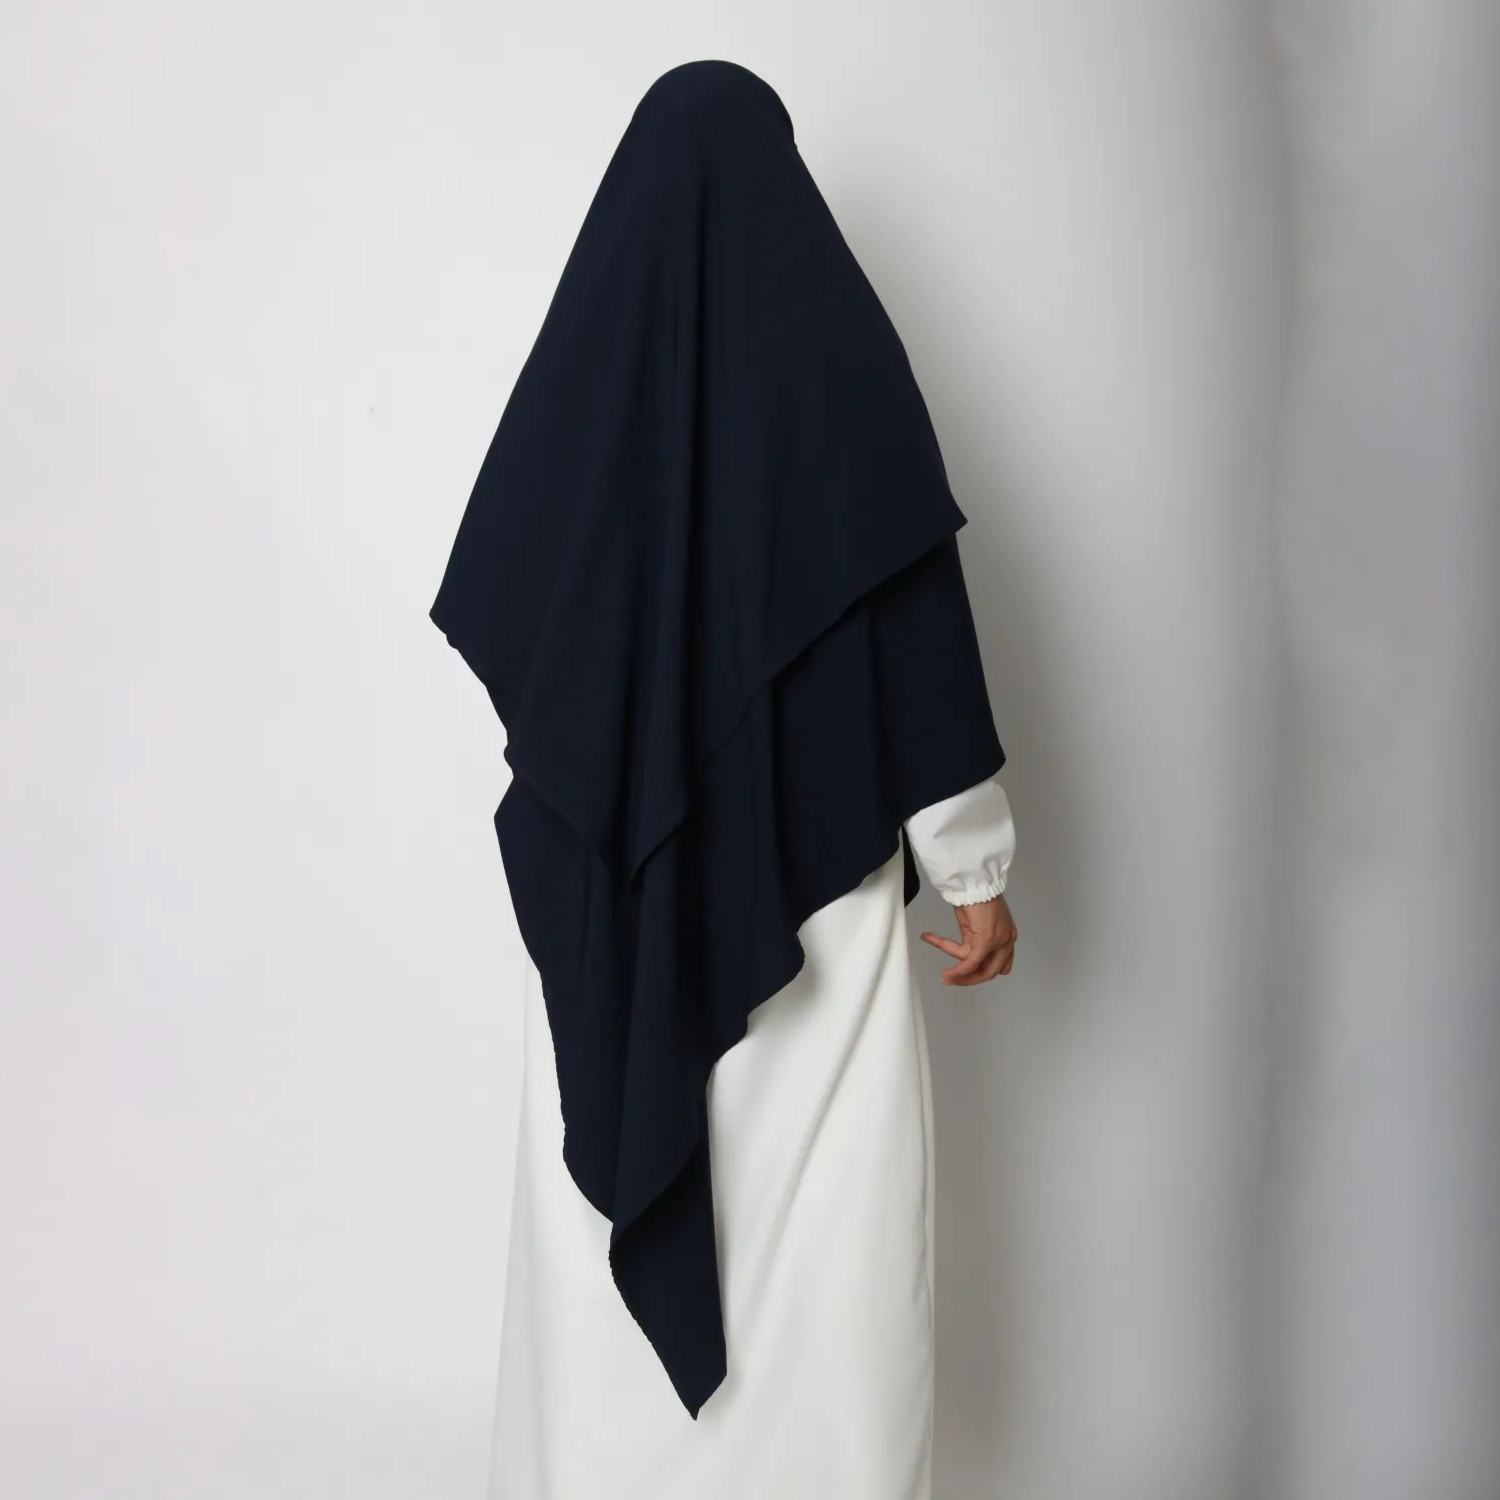 Khimar : 2 Layer Triangular Diamond Instant Khimar-Hijab-Jilbab for Girls & Women in Navy Blue Color | Tie Back Burkha Jilbab Khimar Style Abaya Hijab Niqab Islamic Modest Wear